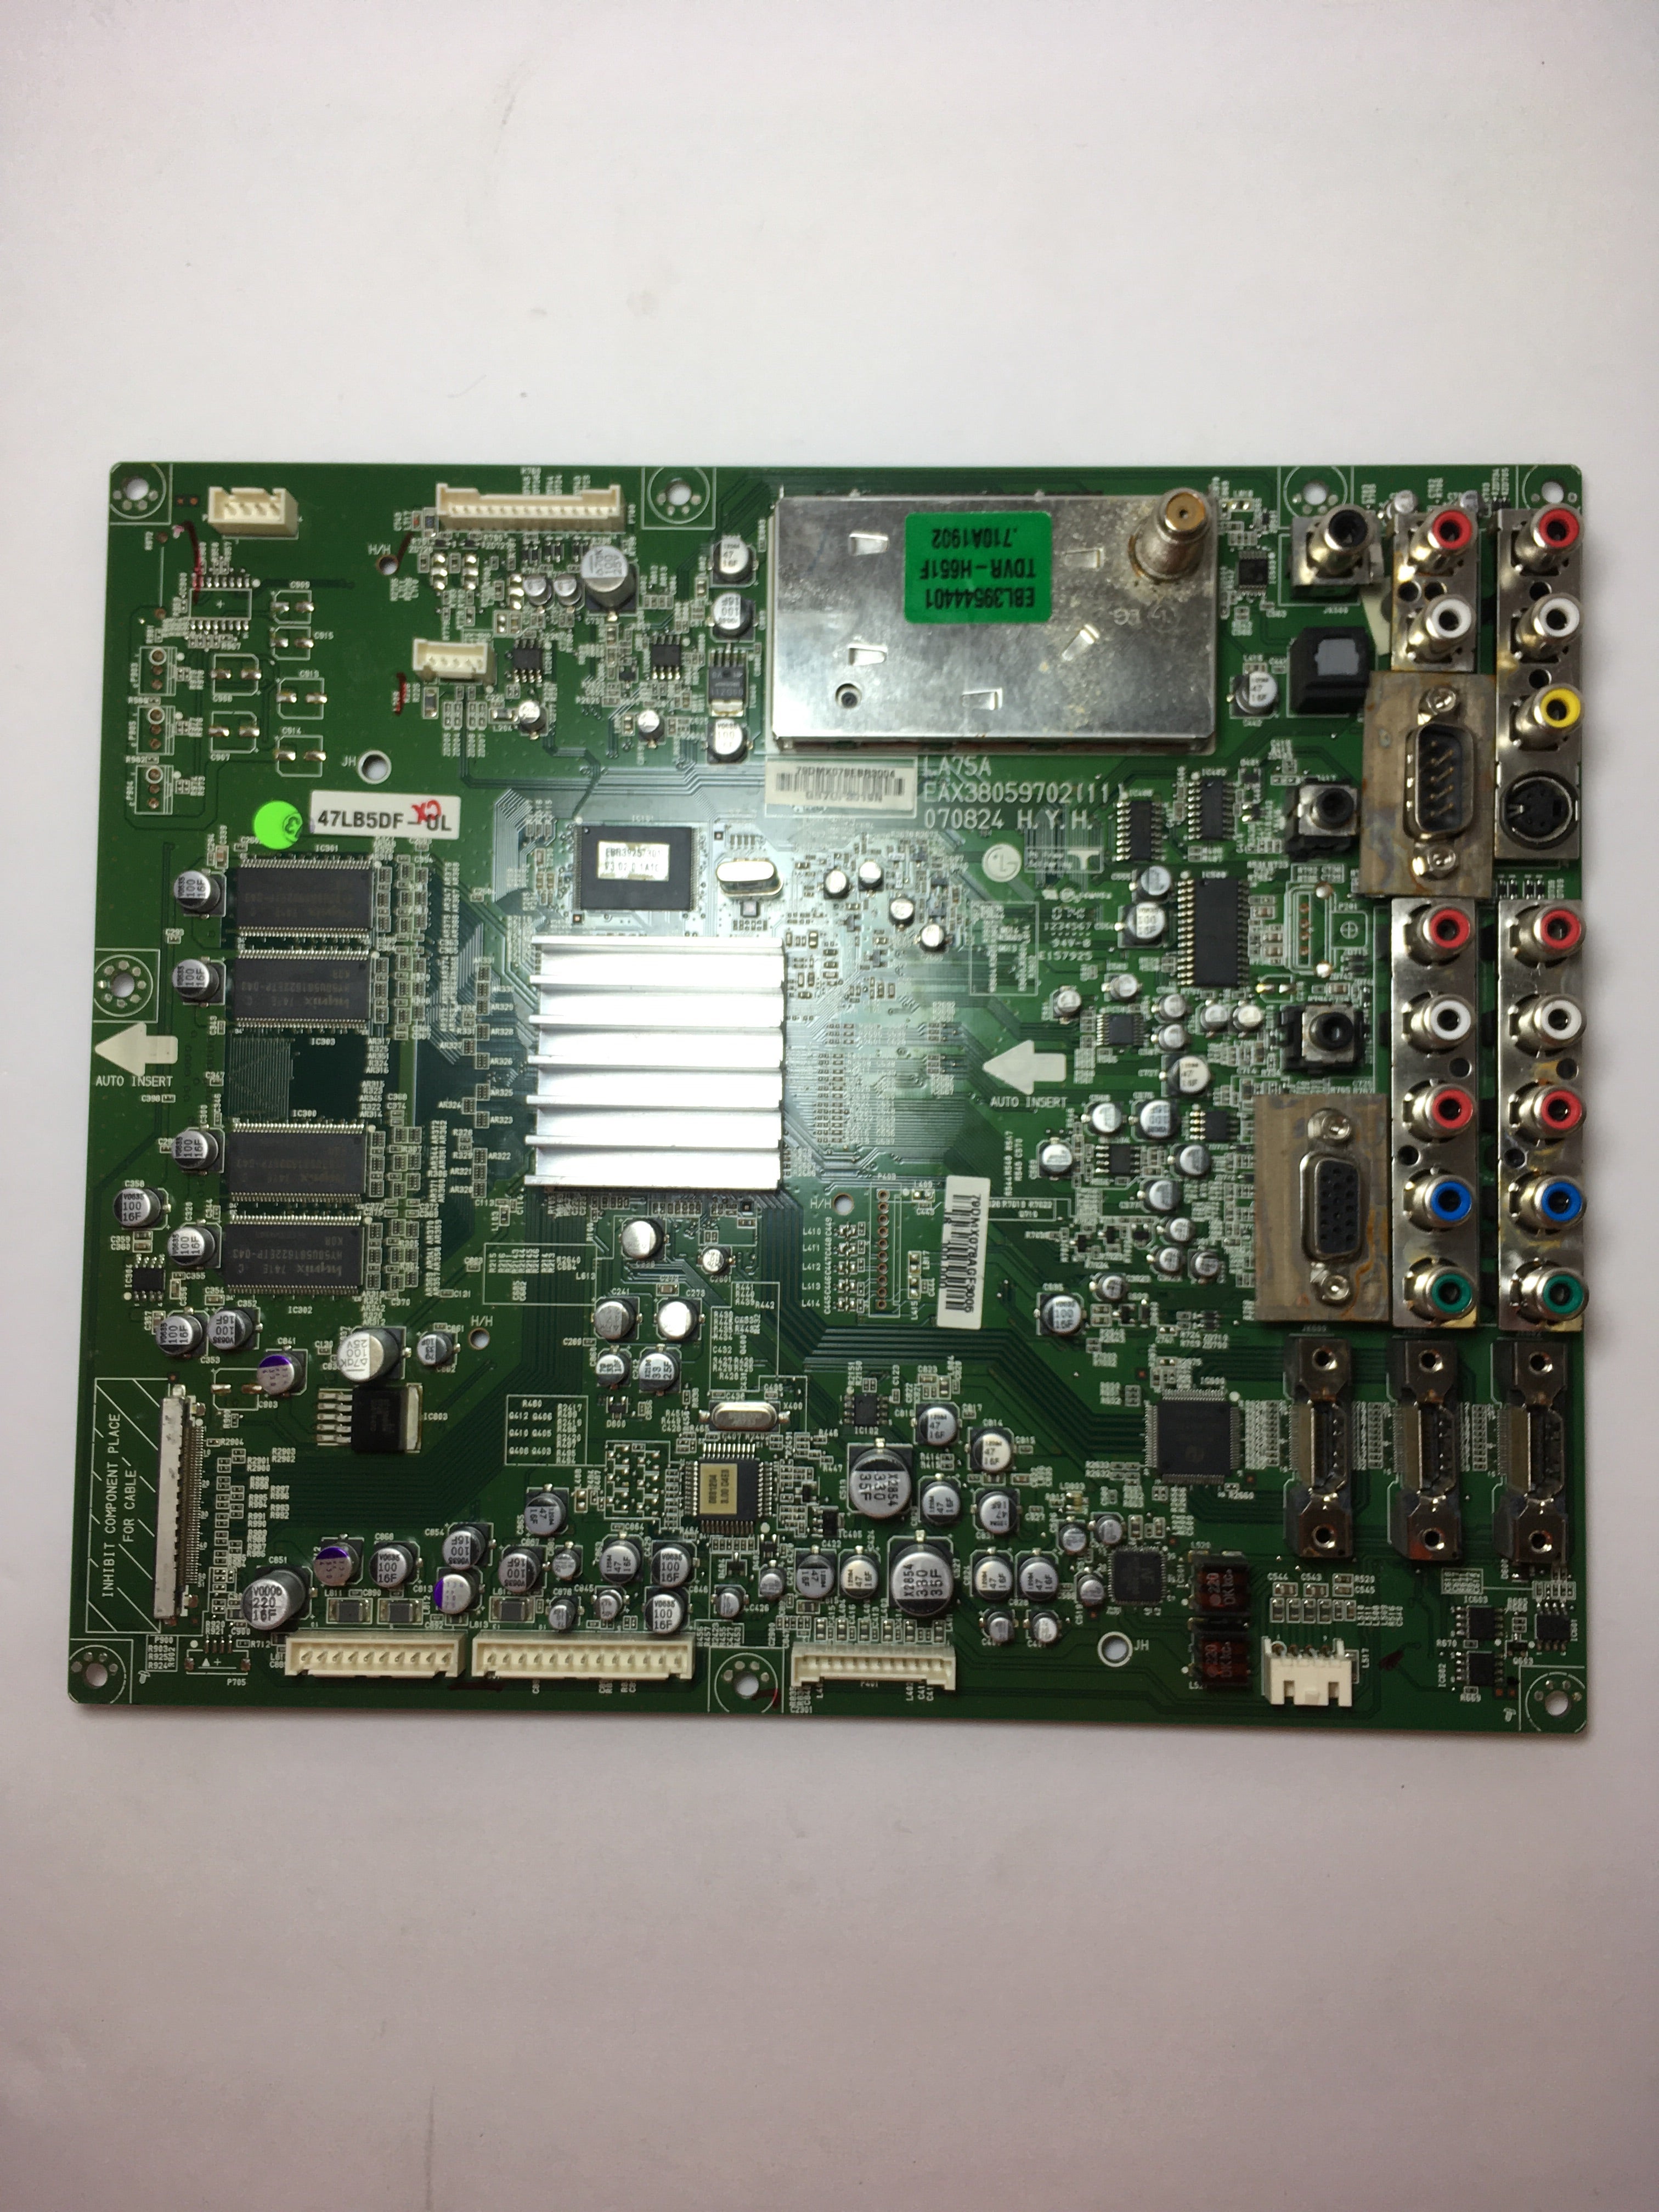 LG 47LB5DF-UL.AUSYLJM (EAX38059702) Main Board